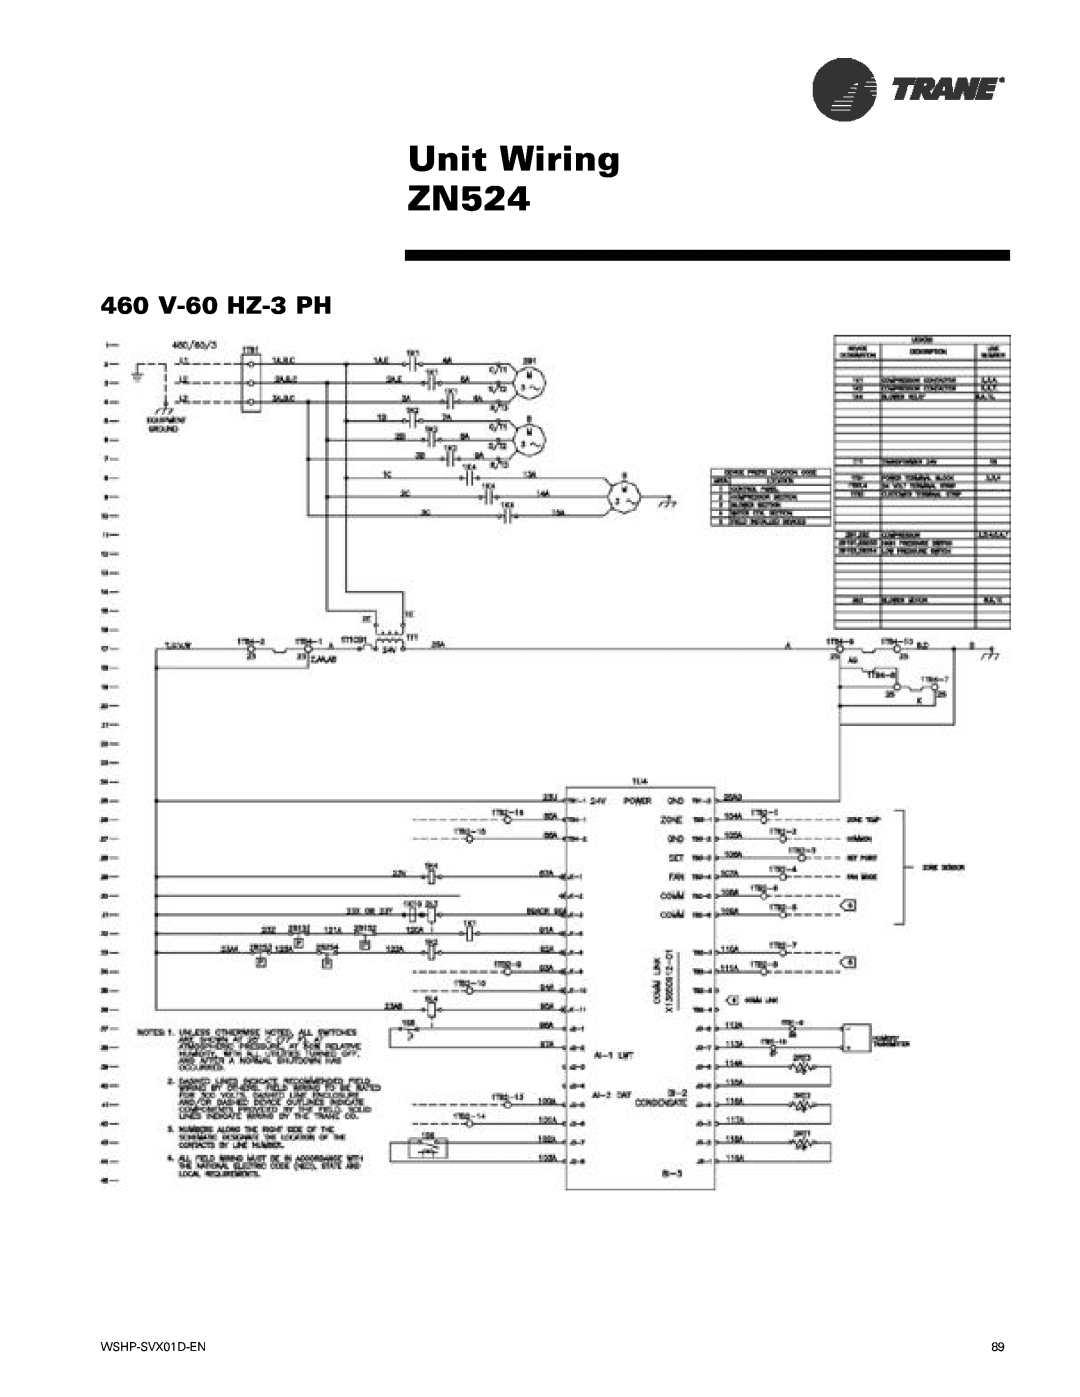 Trane GEV, GEH manual Unit Wiring ZN524, 460 V-60 HZ-3PH 